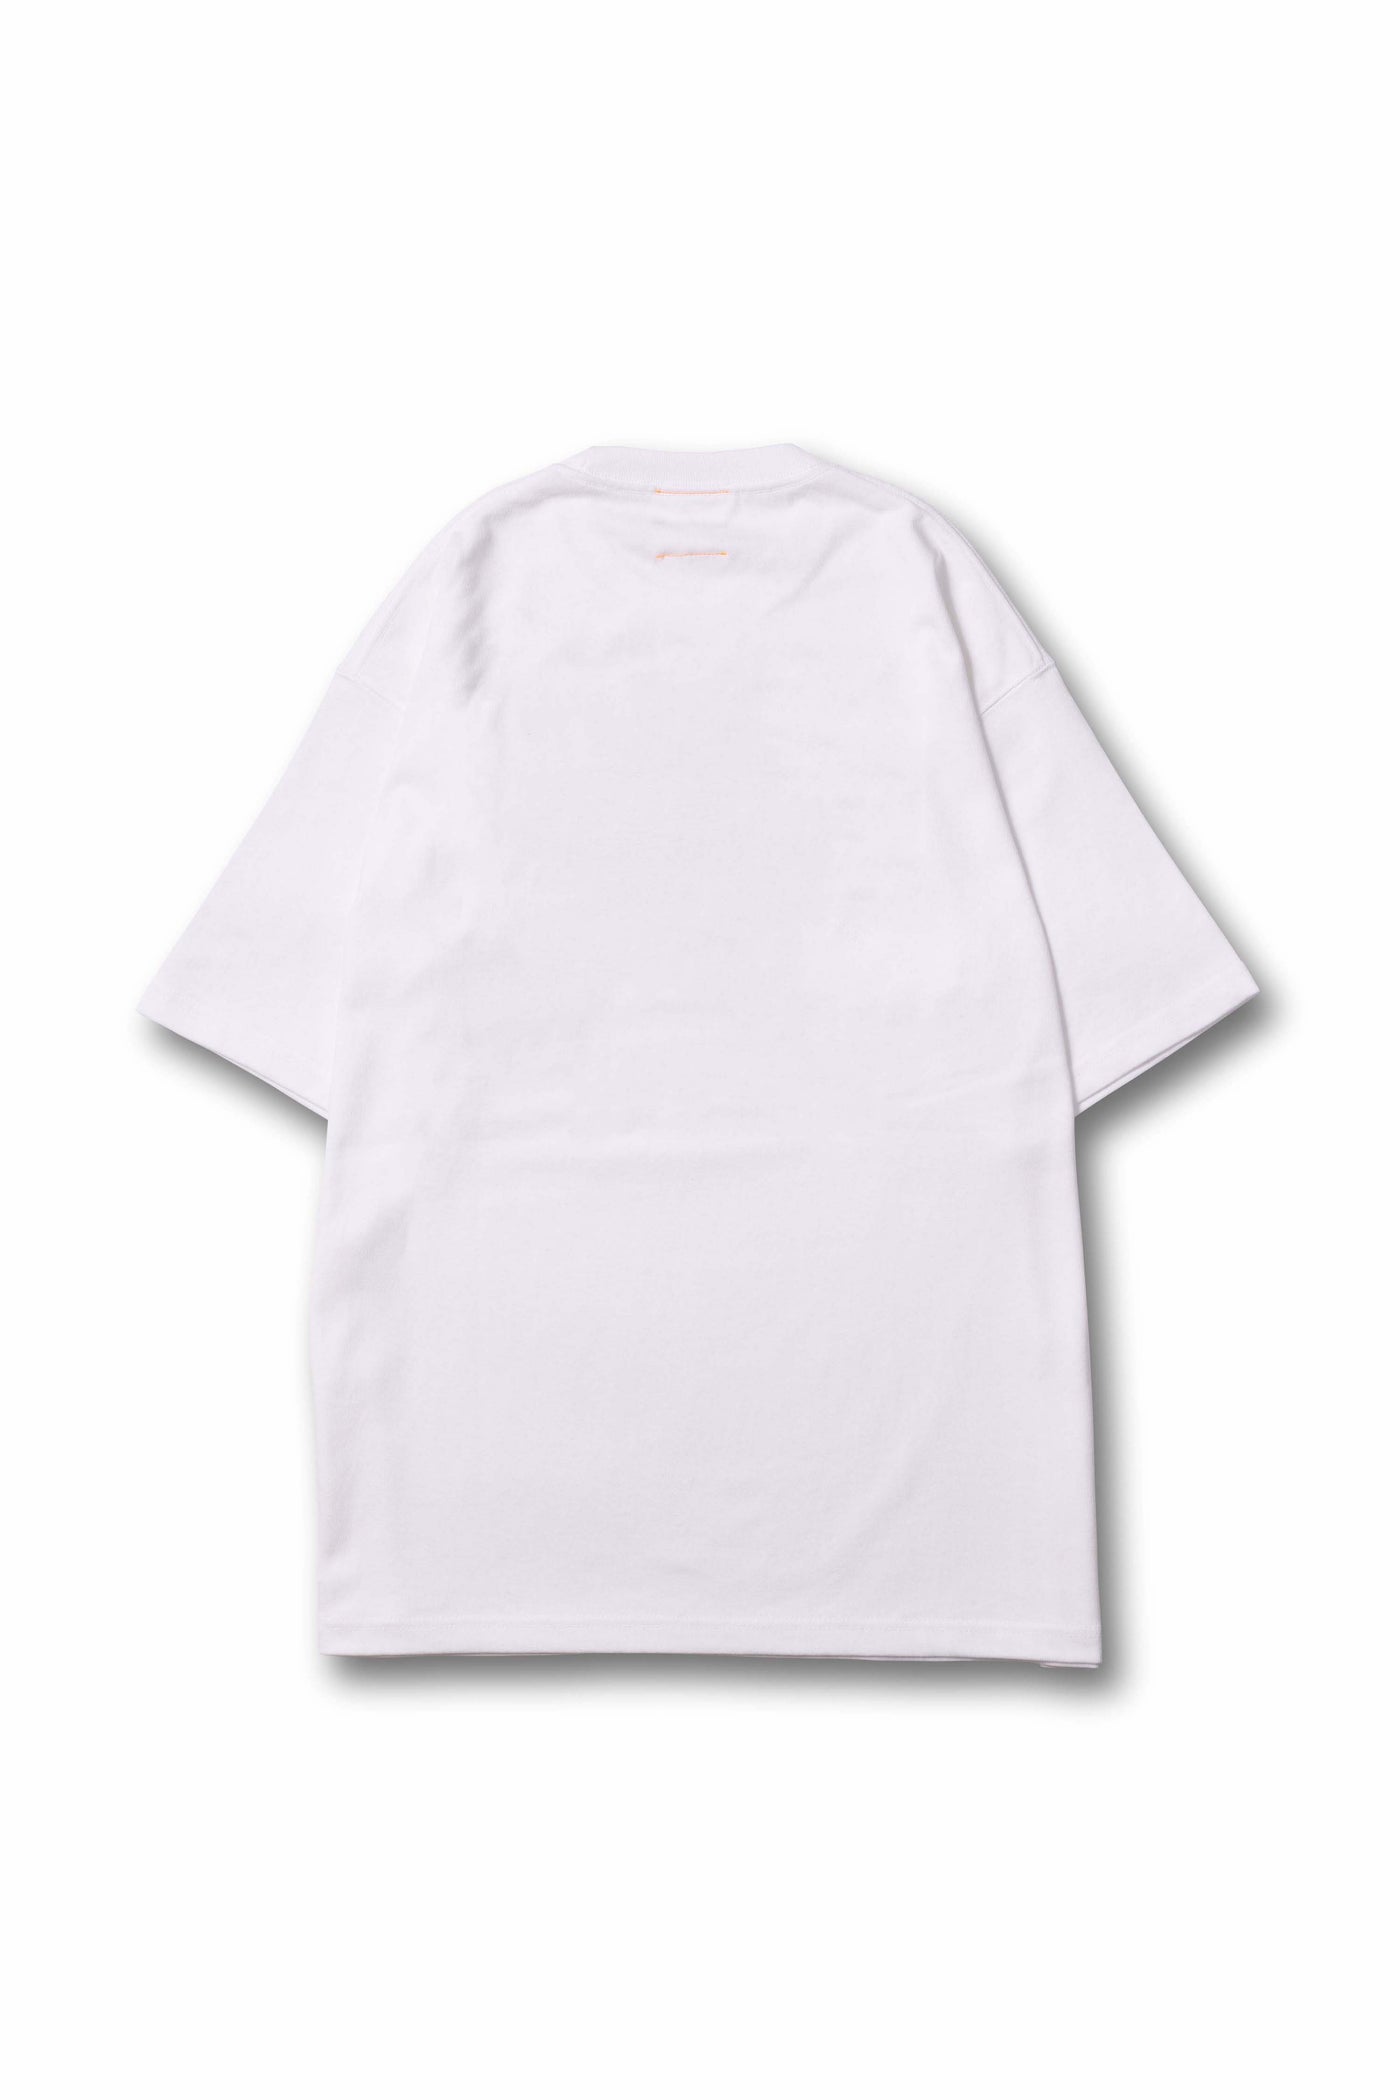 VR × FFXIV SABOTENDER TEE / WHT Mサイズ - Tシャツ/カットソー(半袖